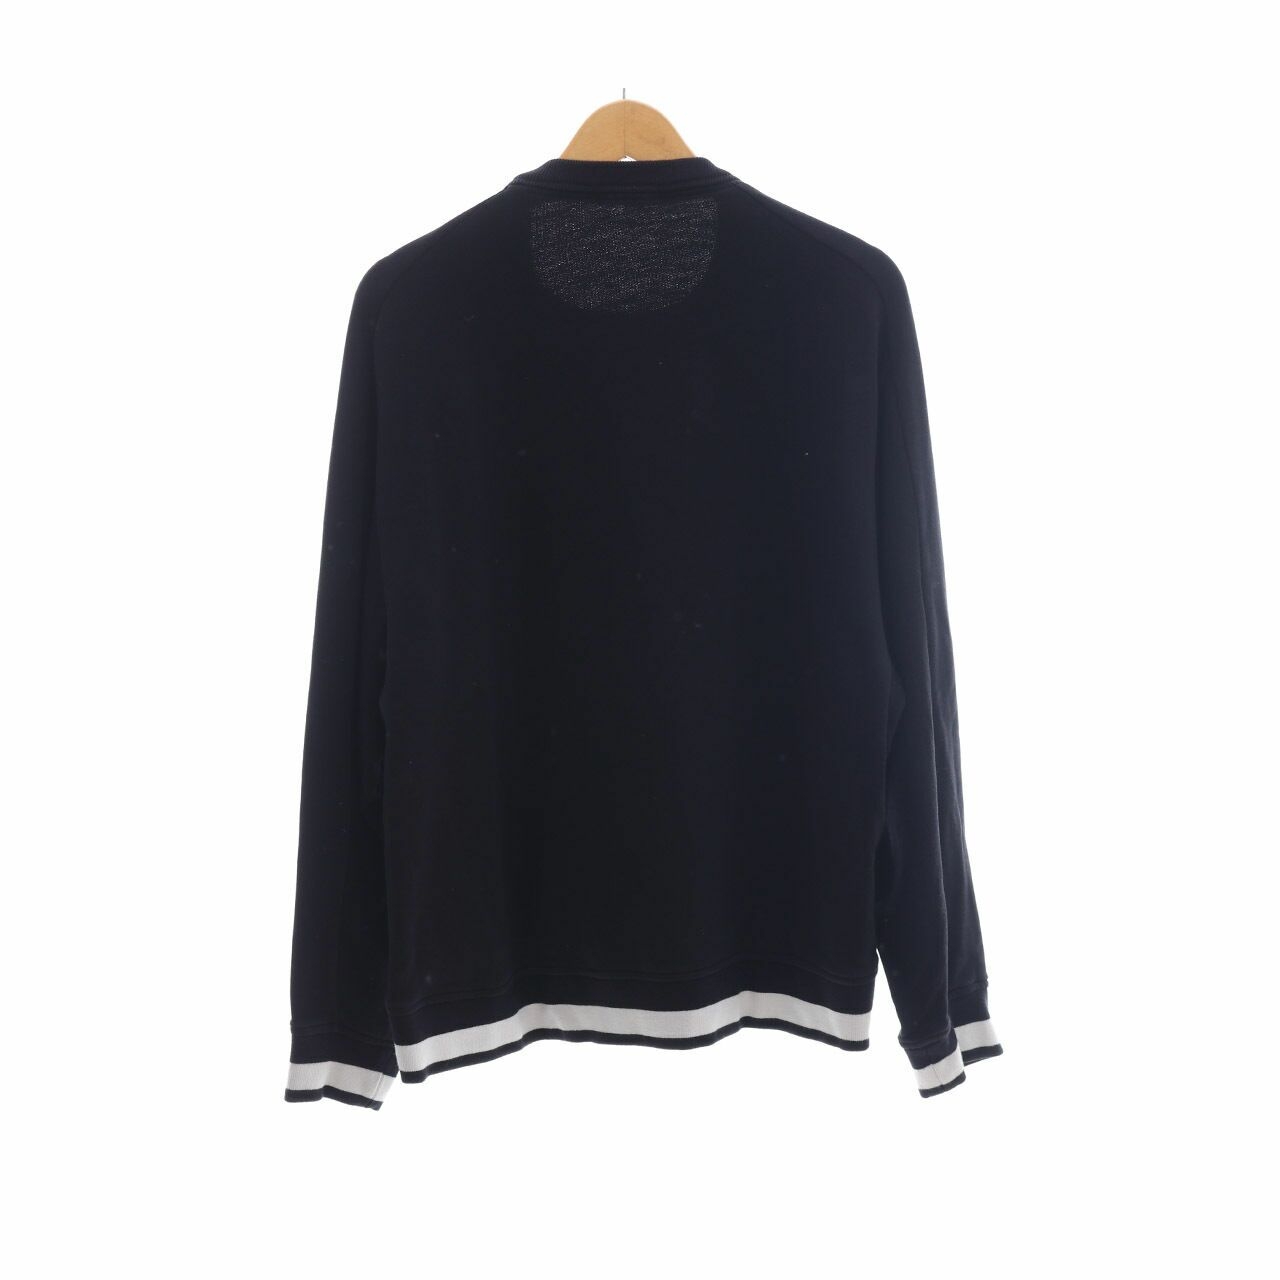 H&M Black Sweater